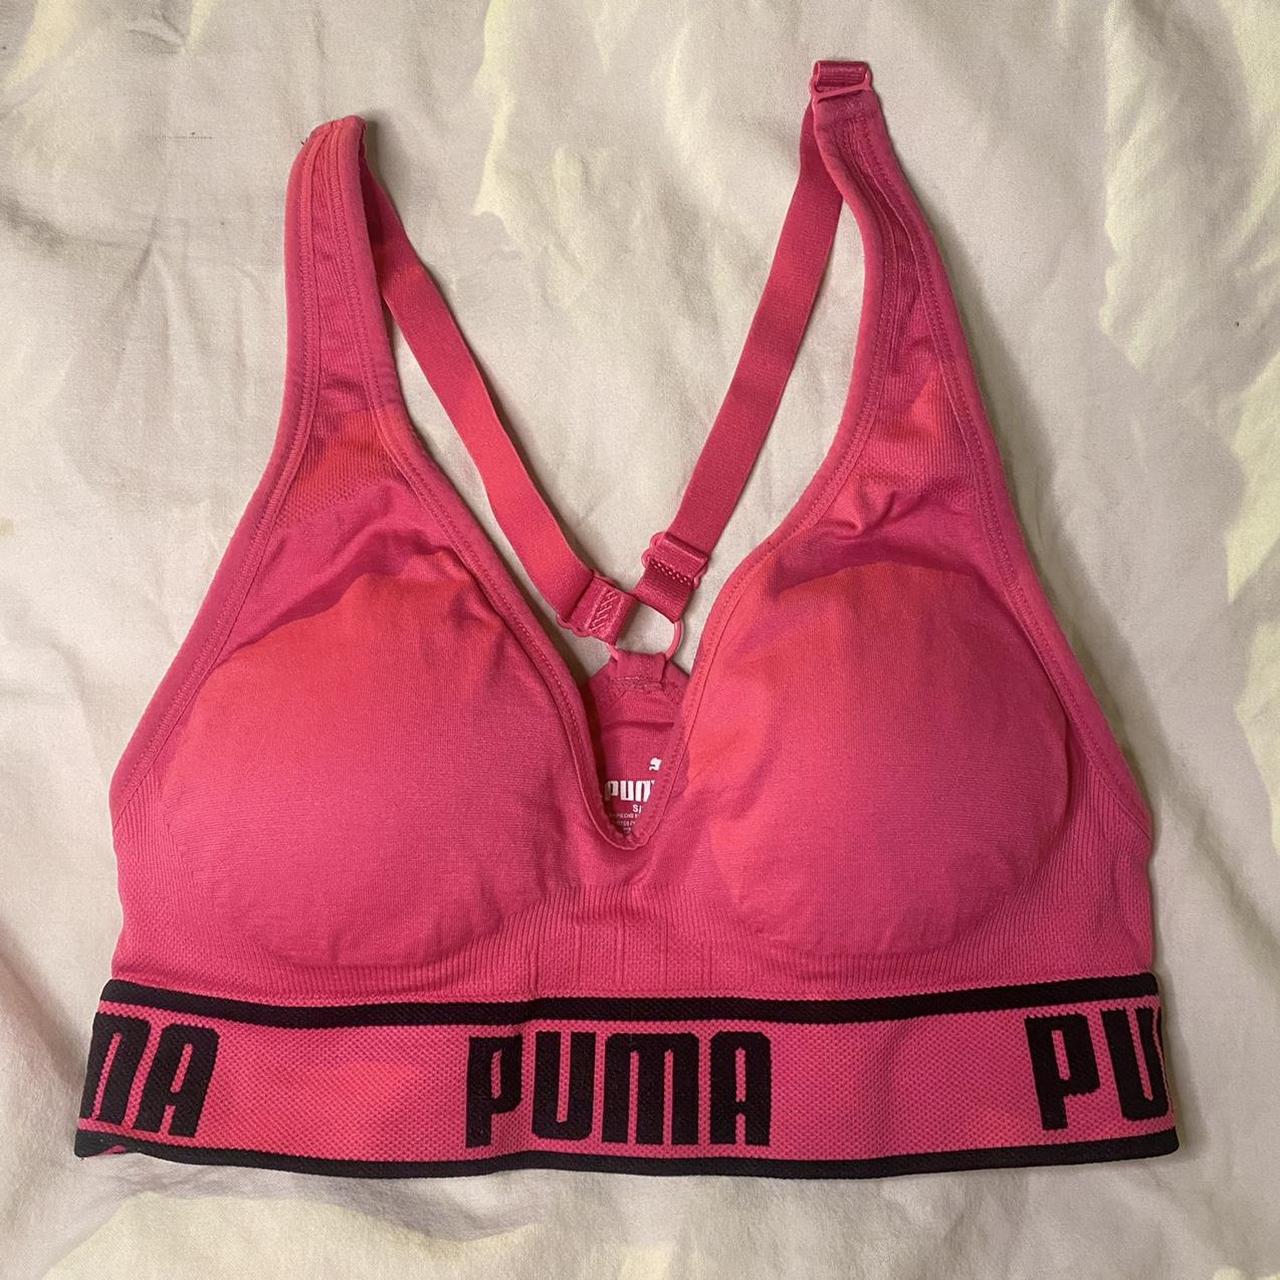 Depop bra - Puma Hot... outfitters Urban adjustable sports